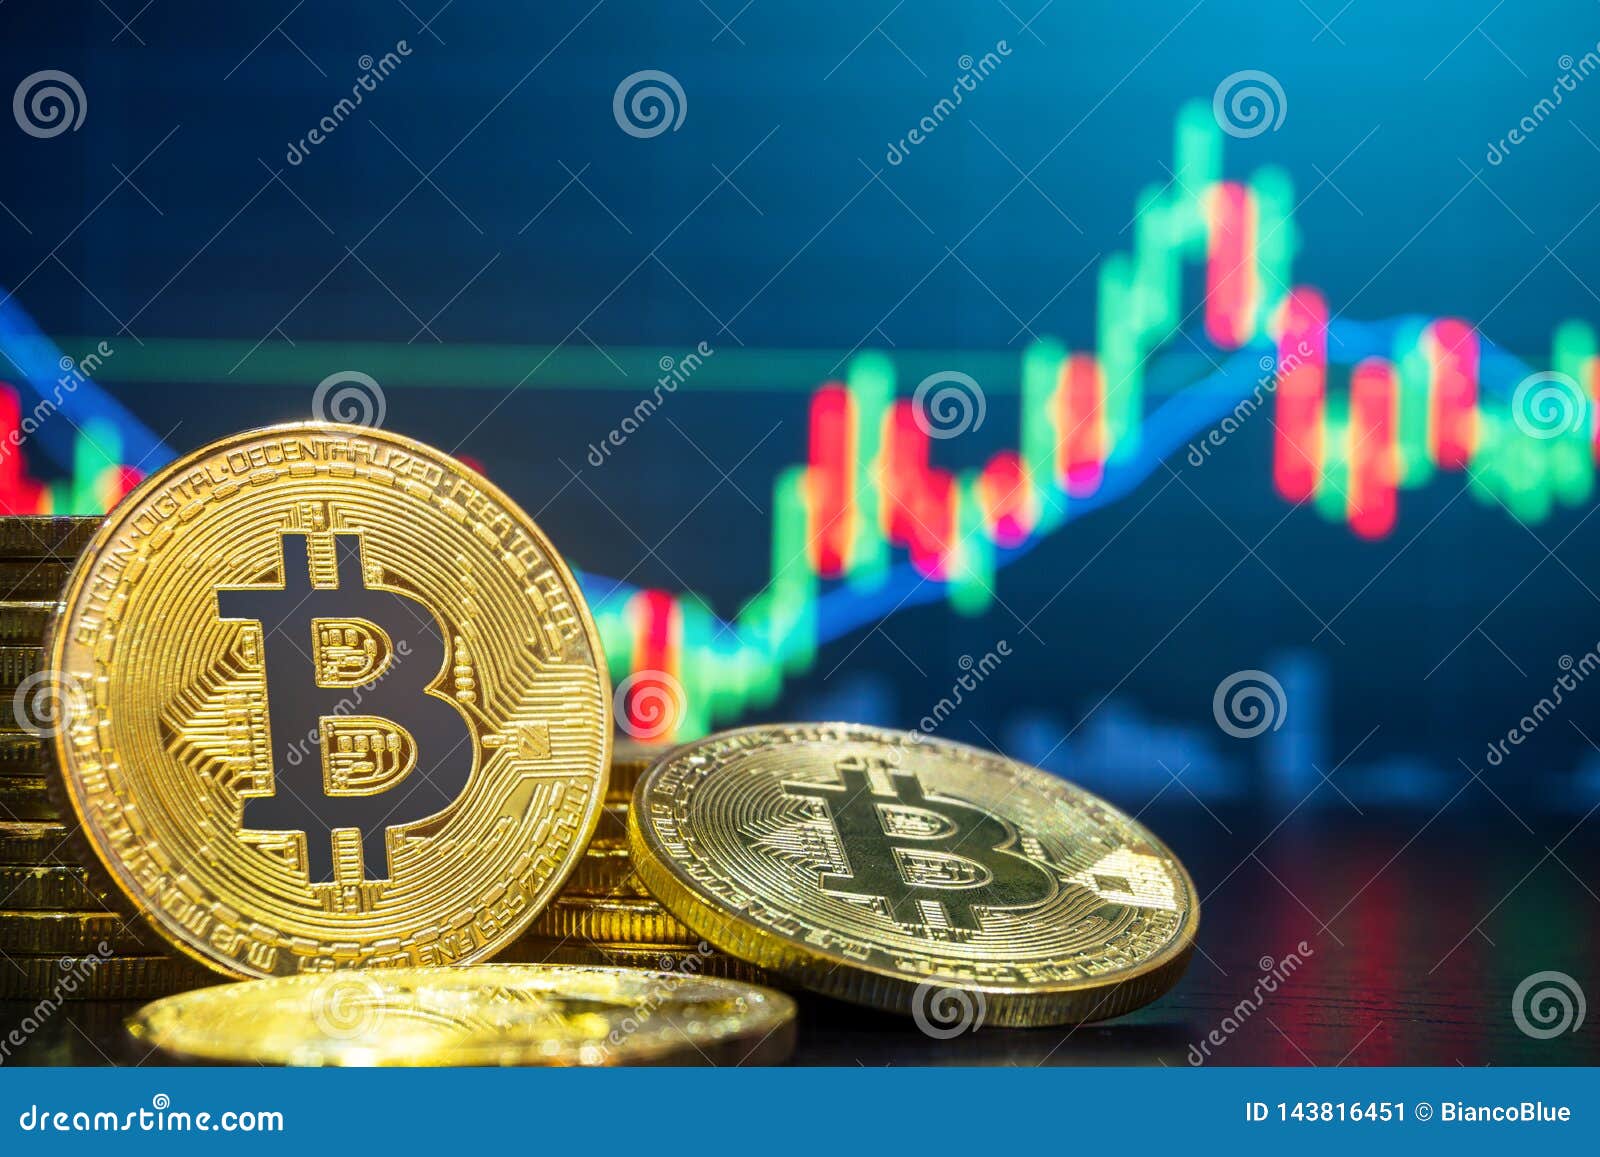 bitcoin and markets